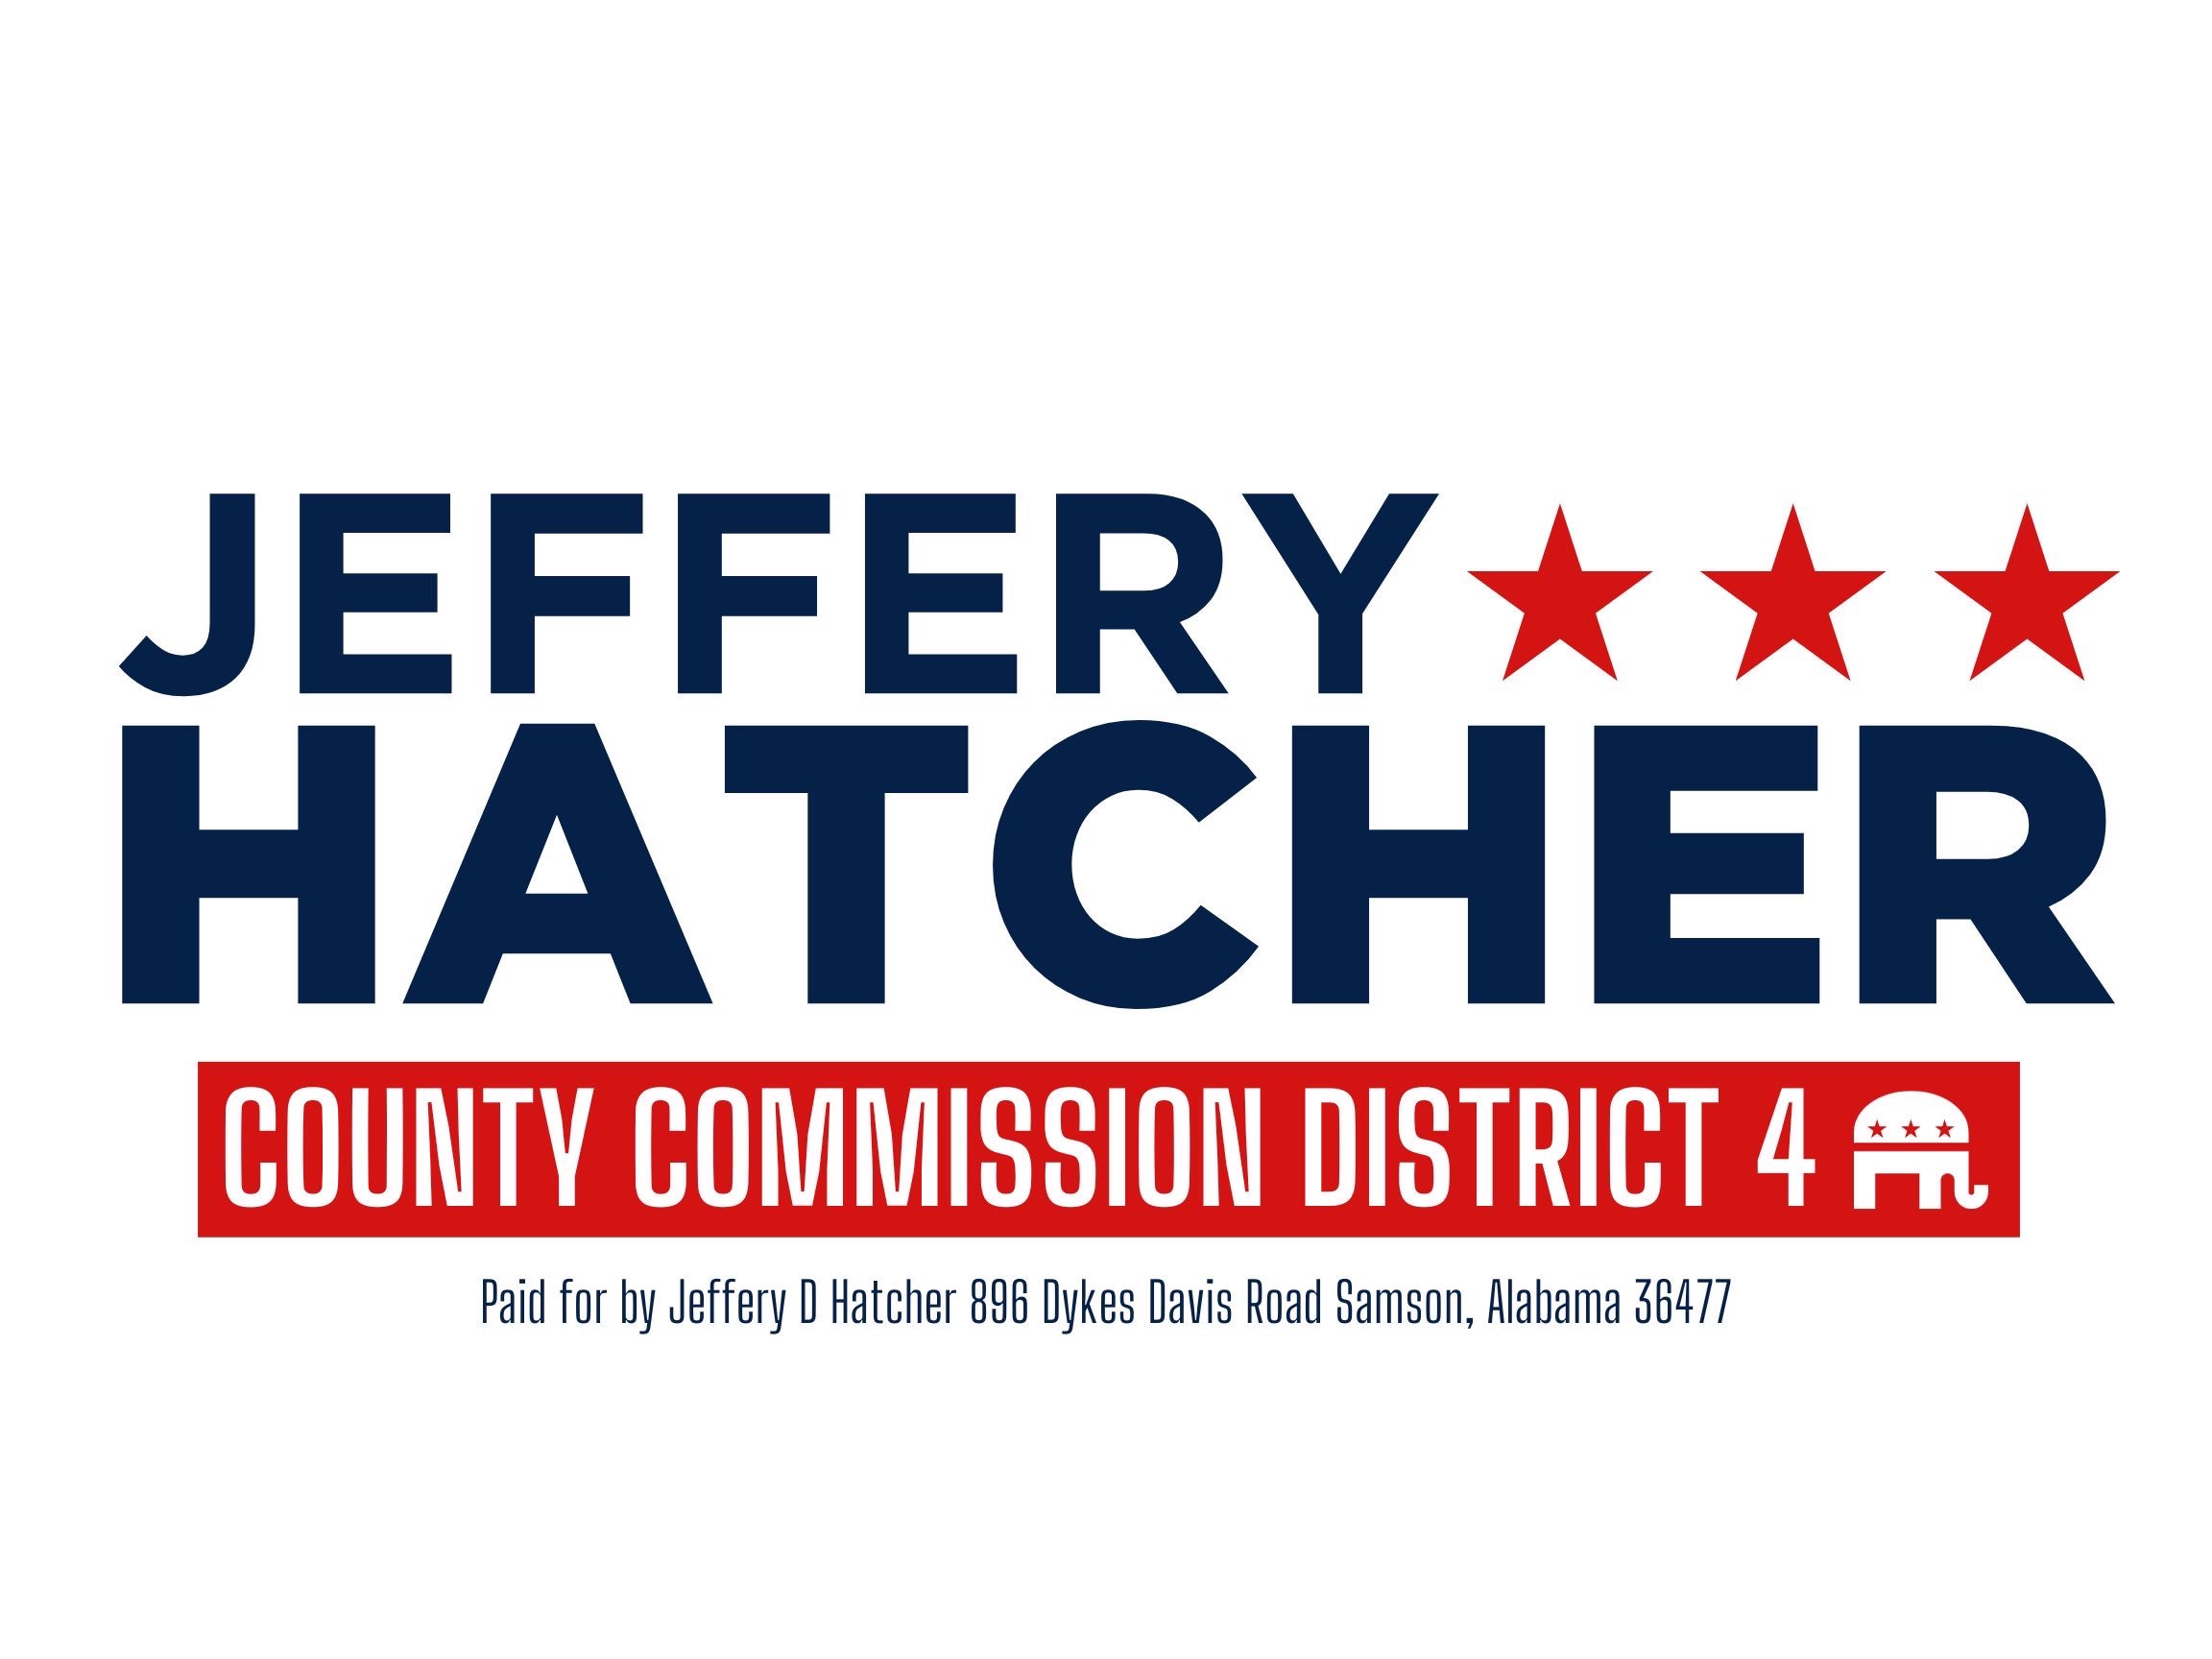 Jeffery Hatcher for Geneva County Commission